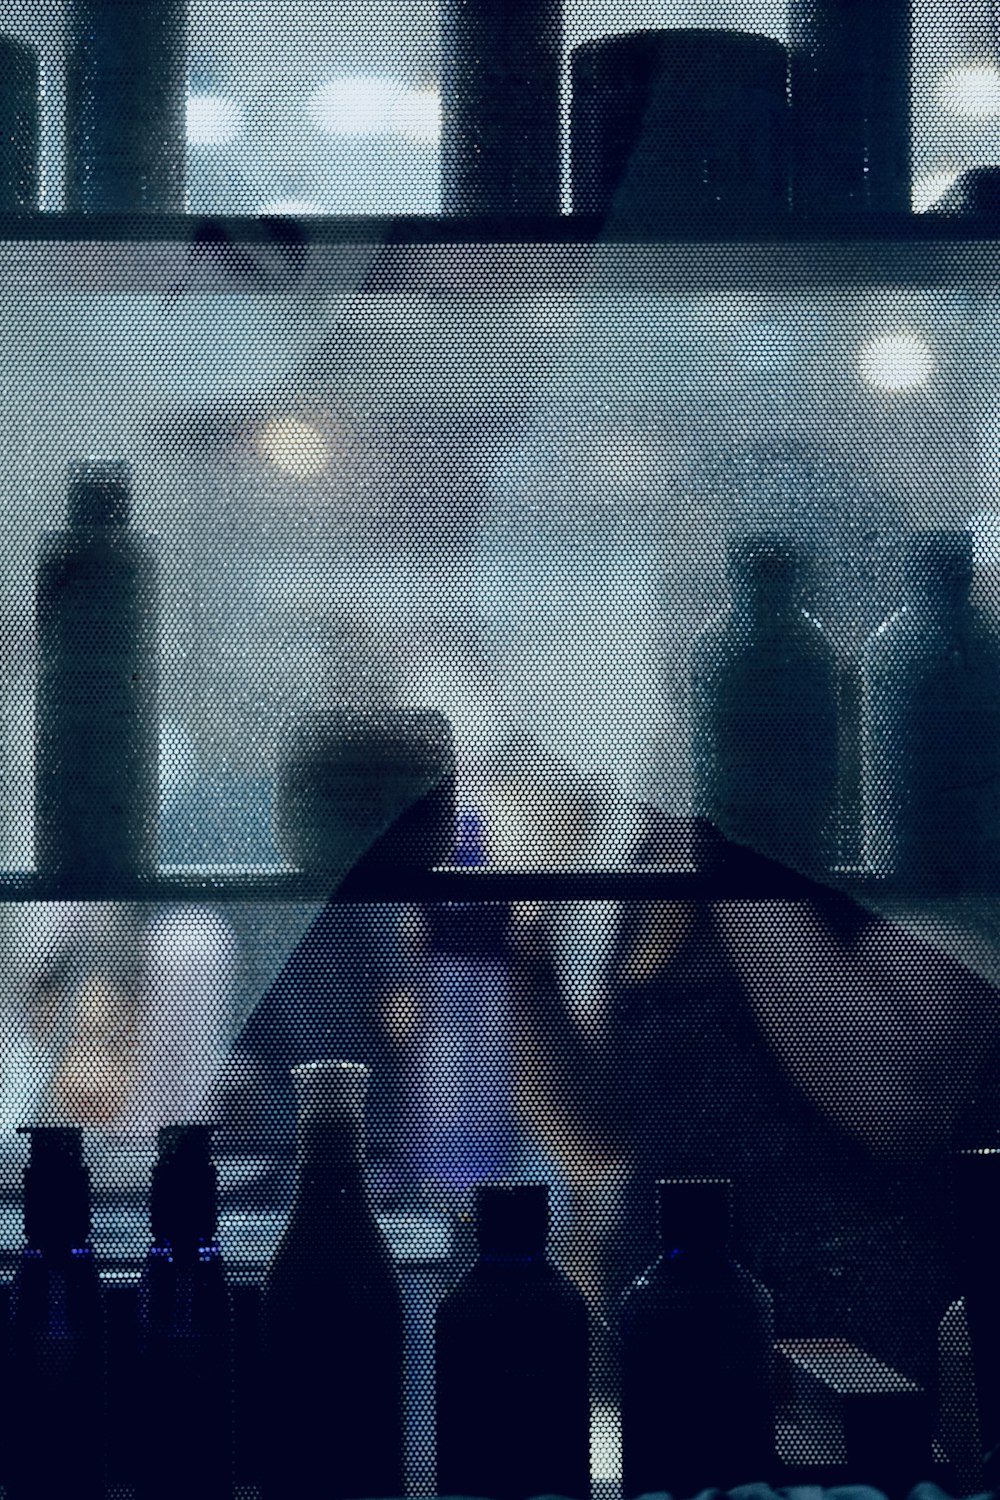 a blurry photo of bottles on a shelf